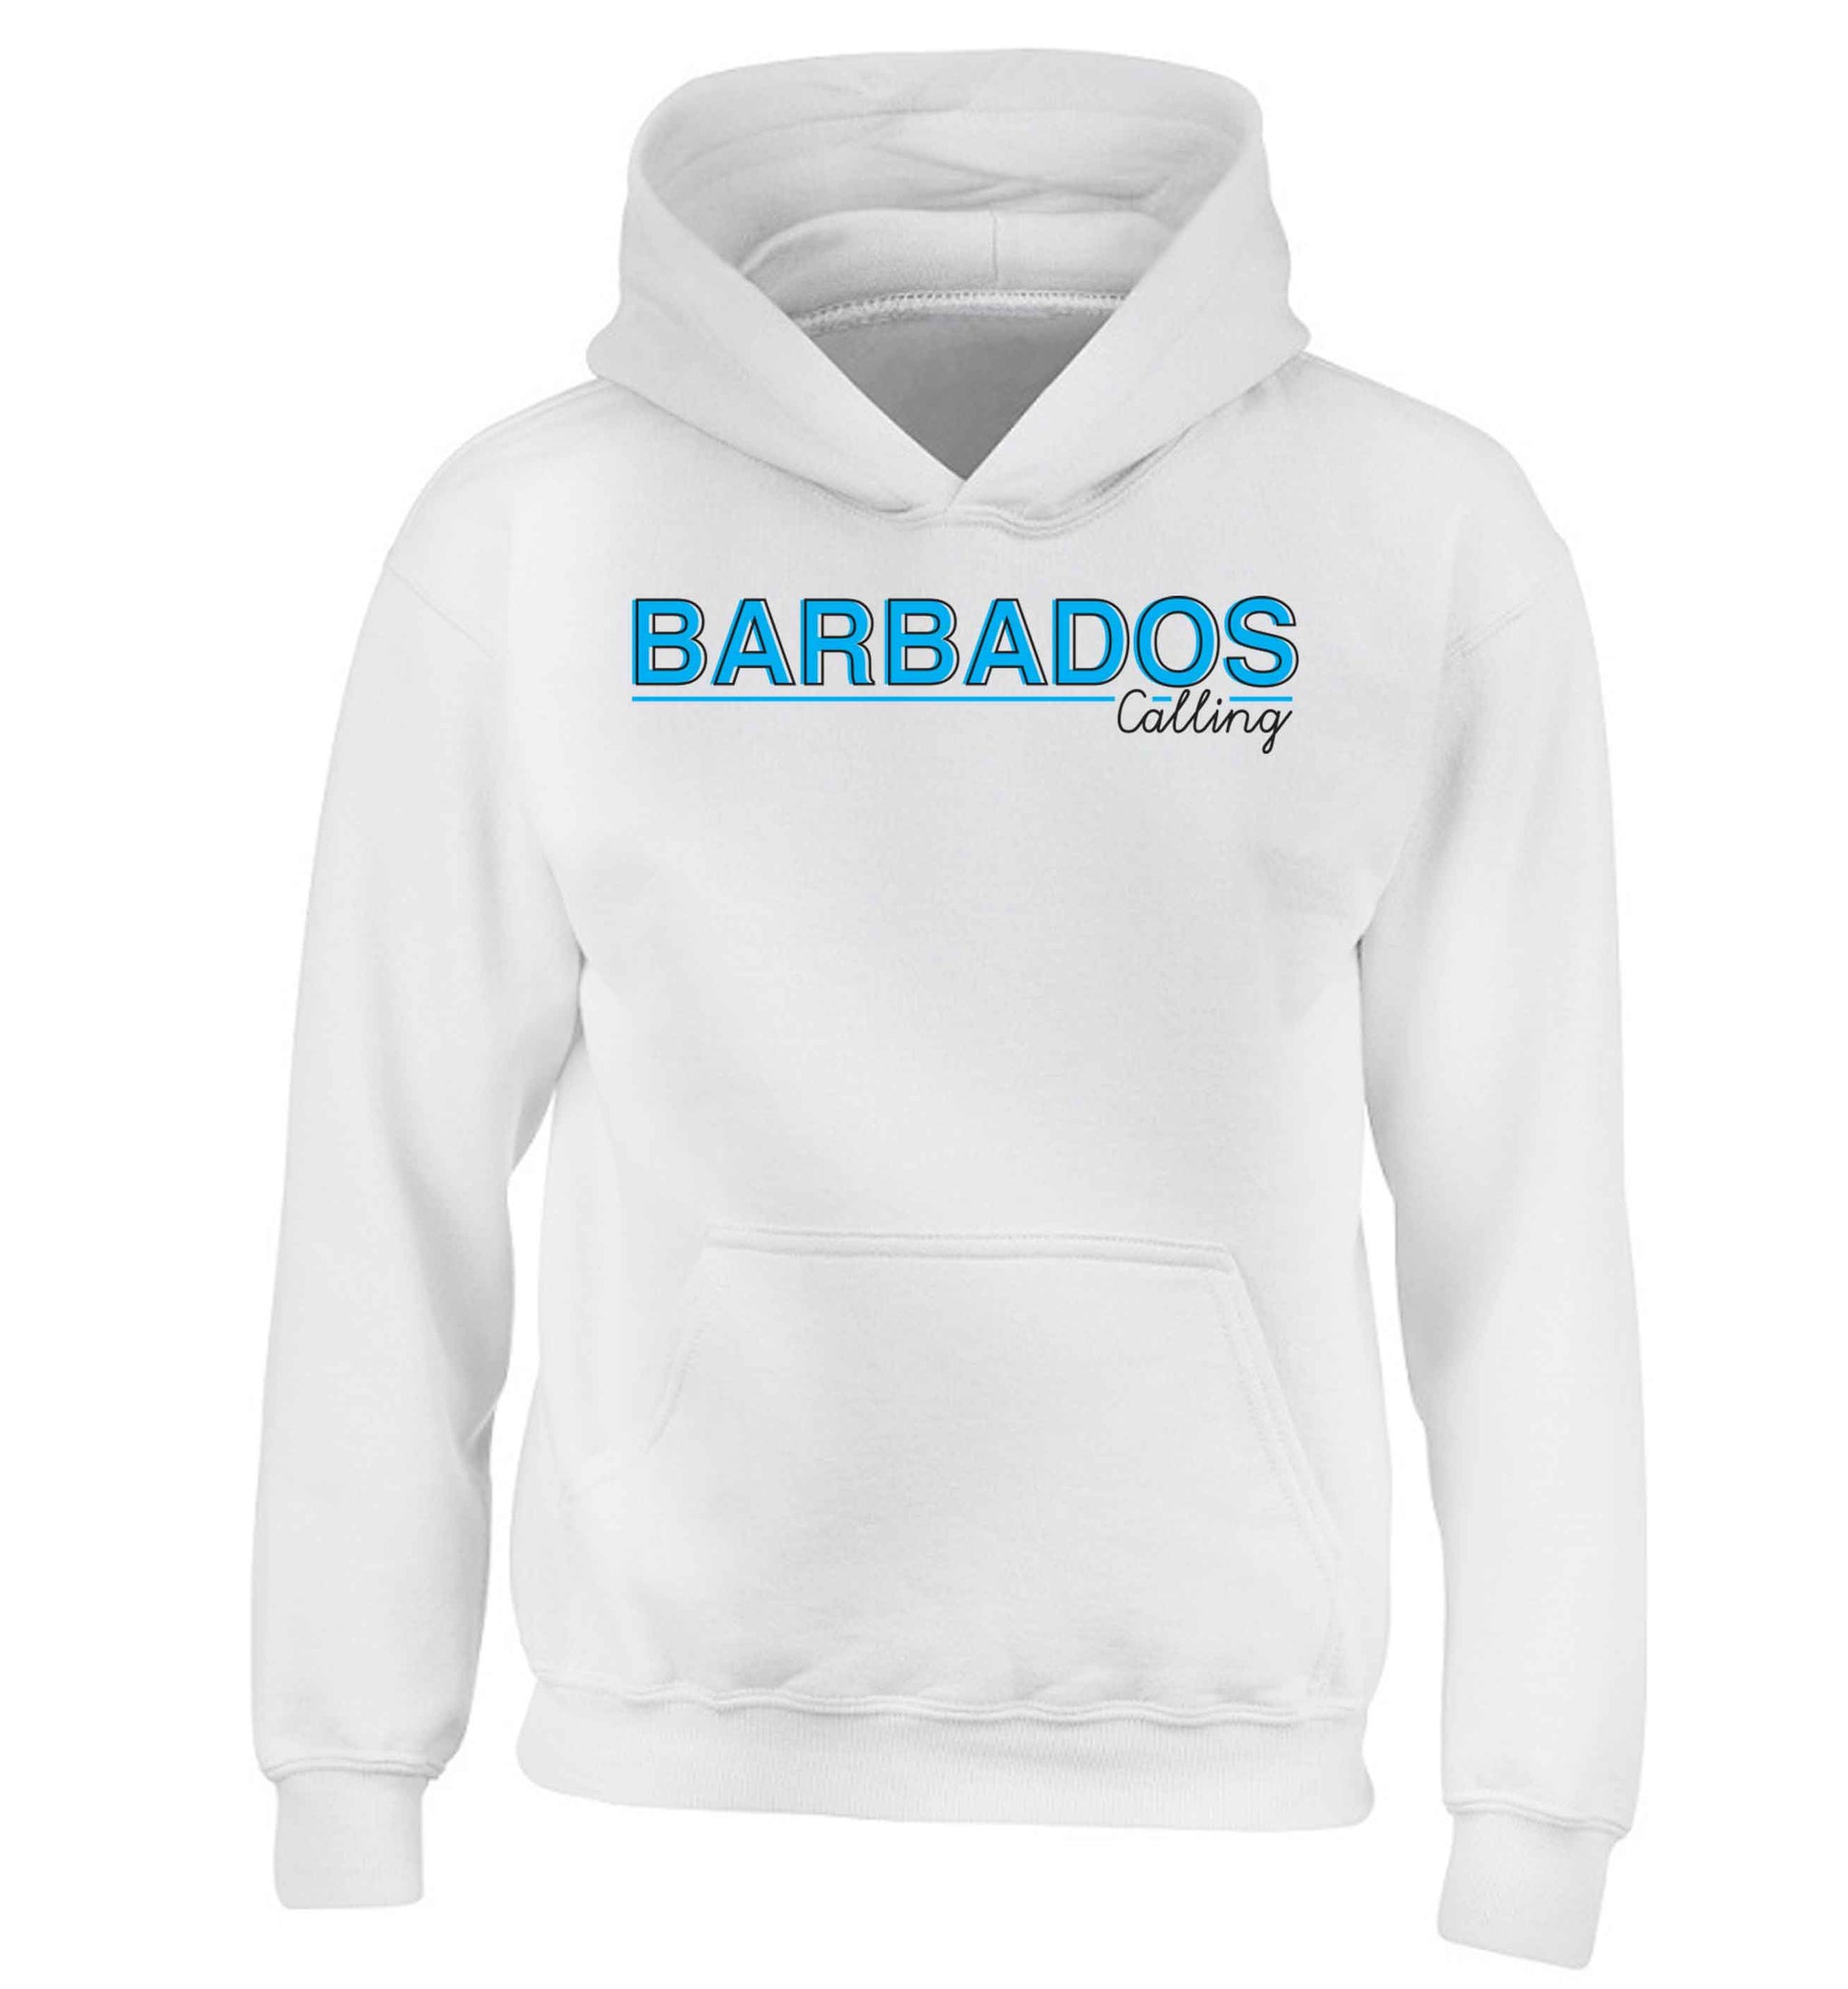 Barbados calling children's white hoodie 12-13 Years